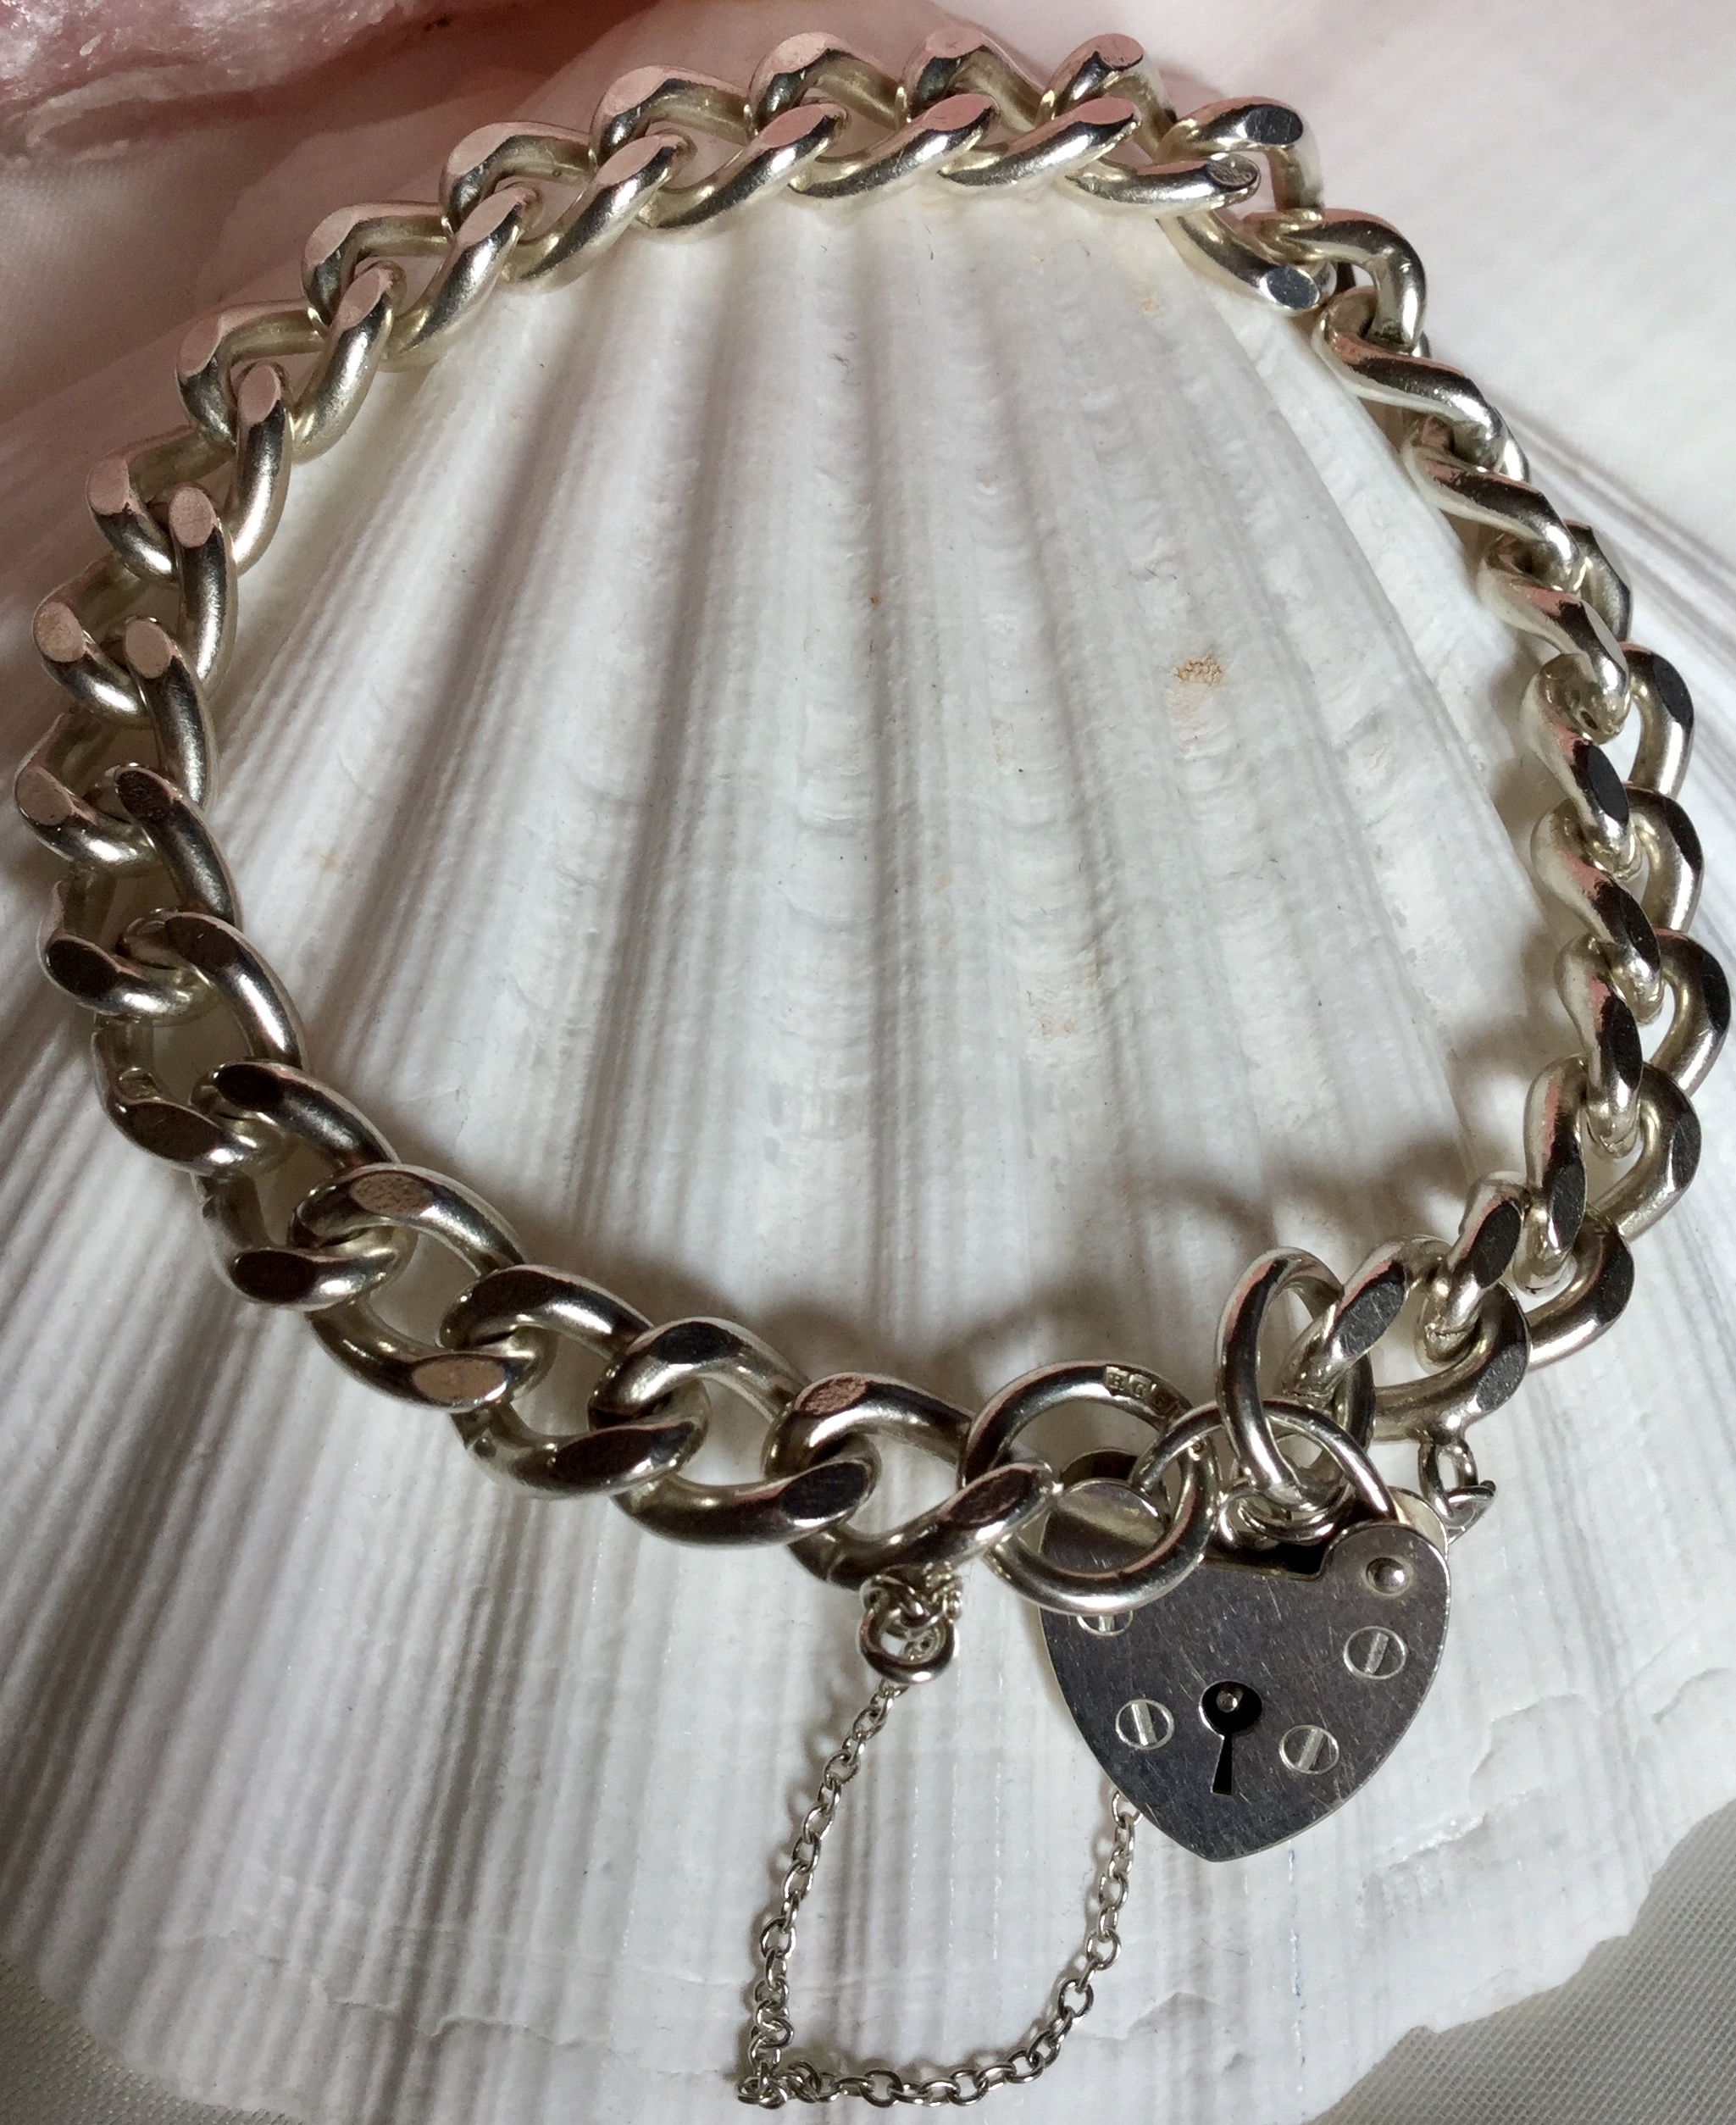 English Vintage 925 Silver Charm Bracelet Heart Clasp English Hallmarks 30.89 grams - Image 4 of 5